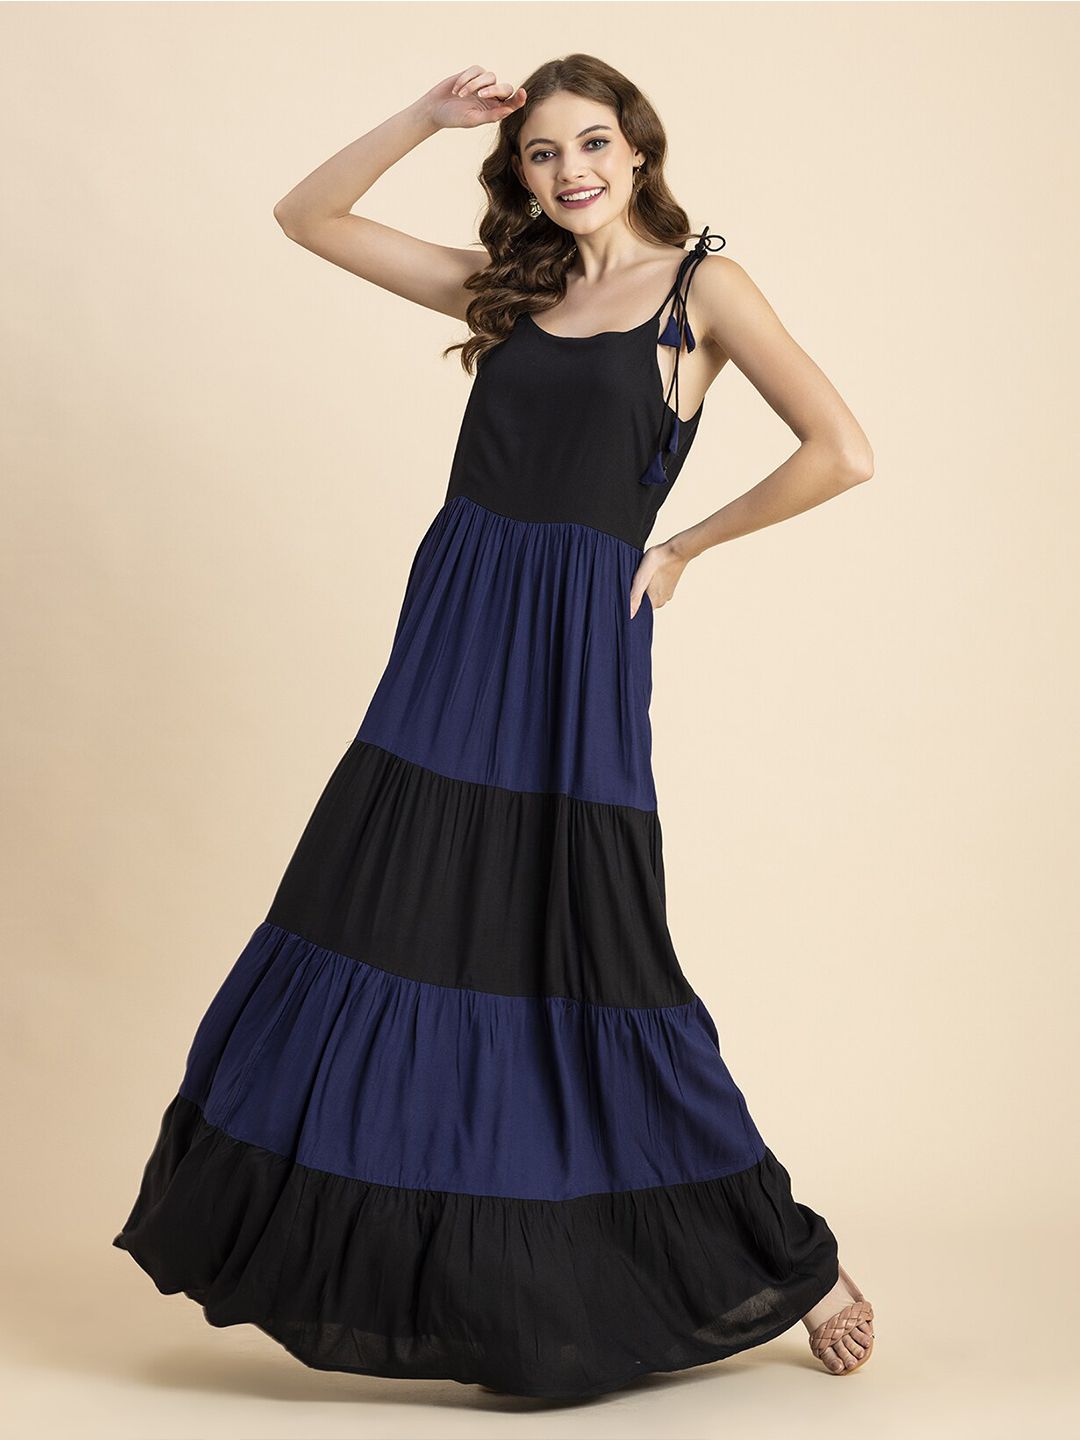 KALINI Colourblocked Tiered Sleeveless Fit & Flare Dress Price in India